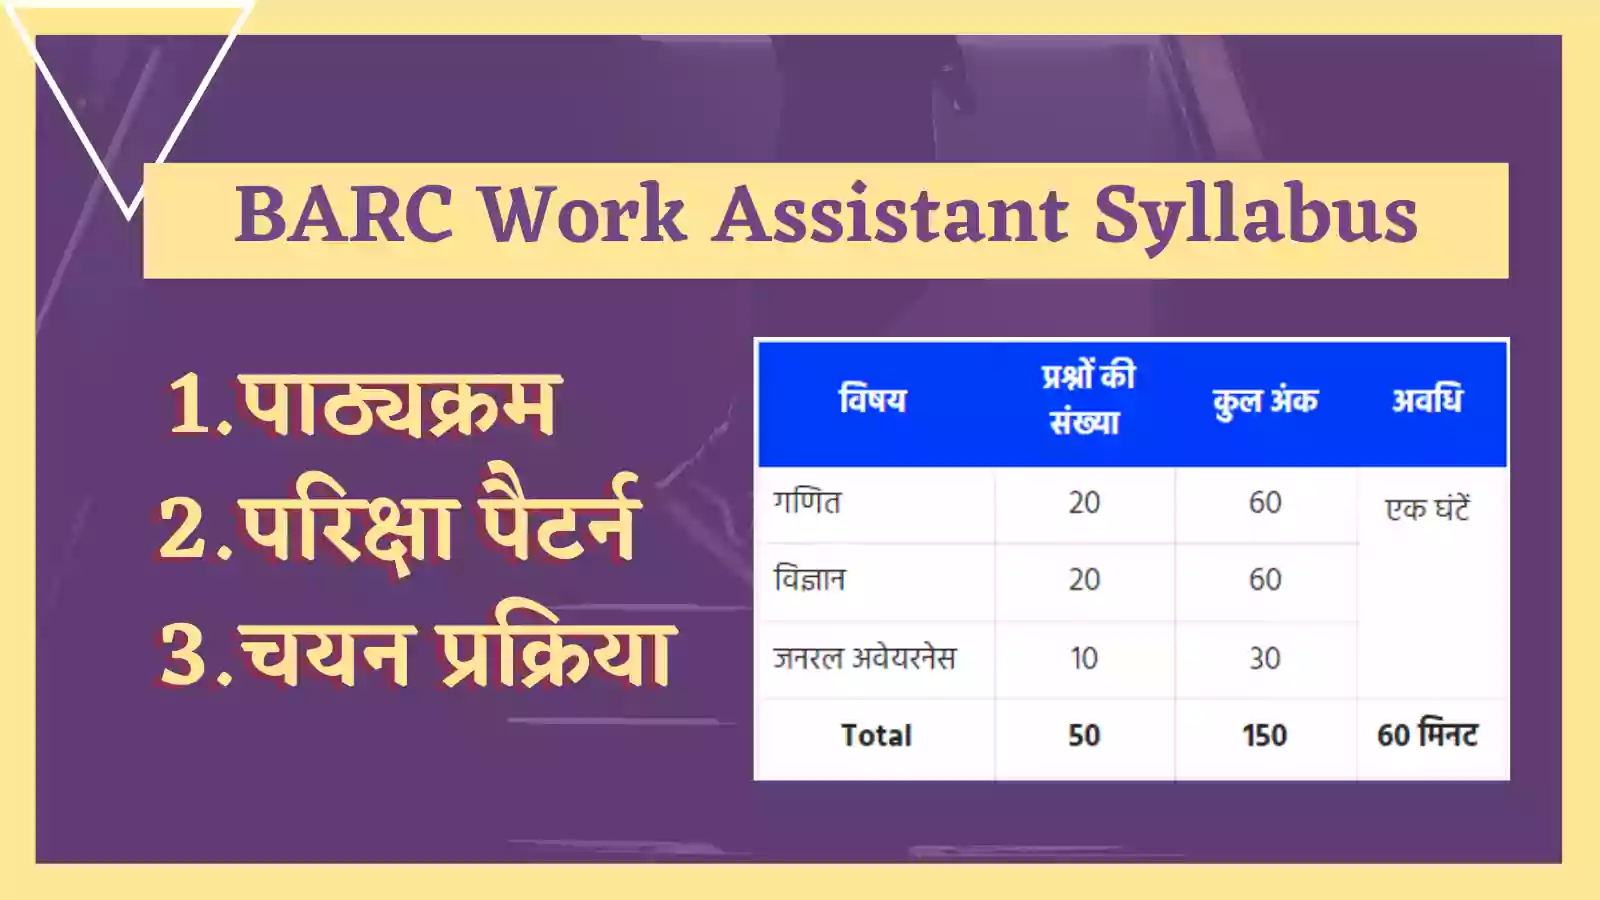 barc work assistant syllabus in hindi in hindi